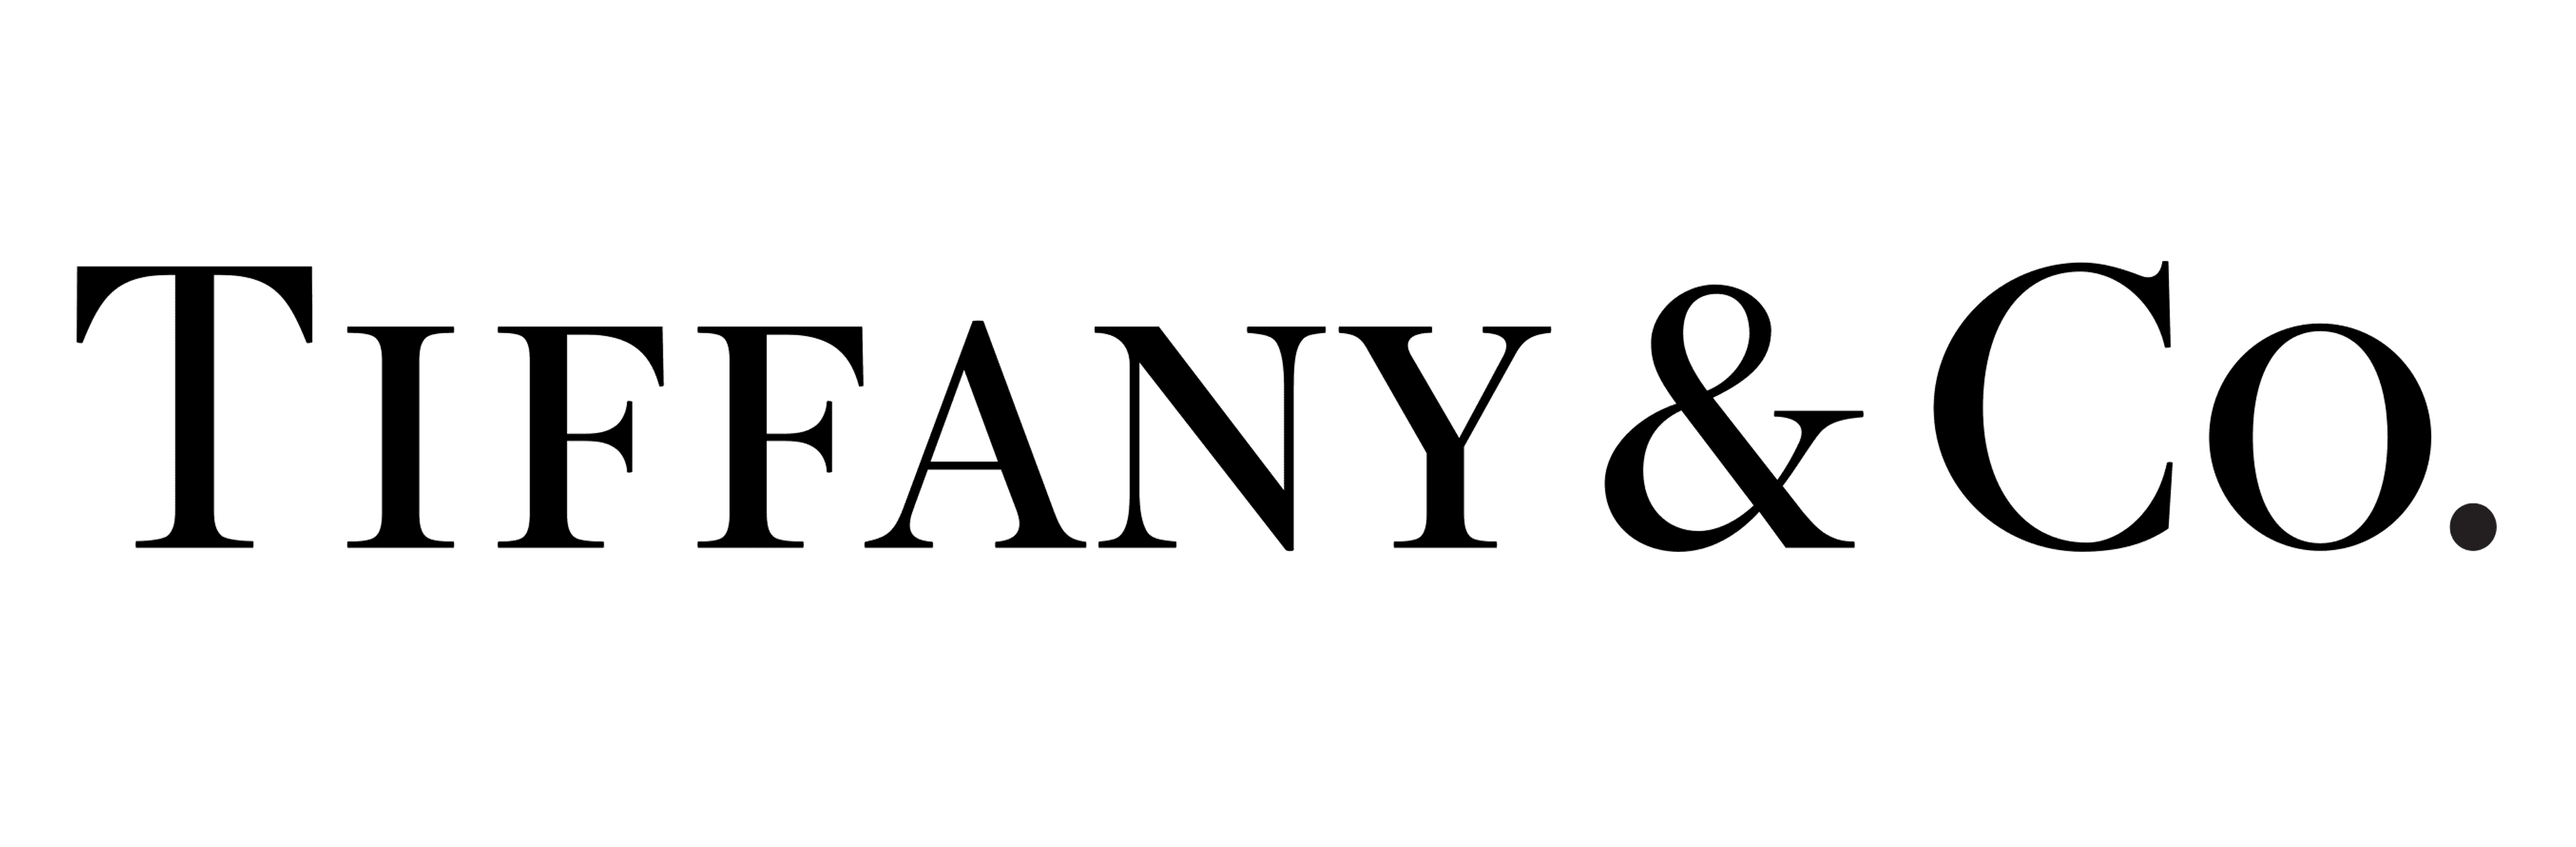 Tiffany-Co-logo.png